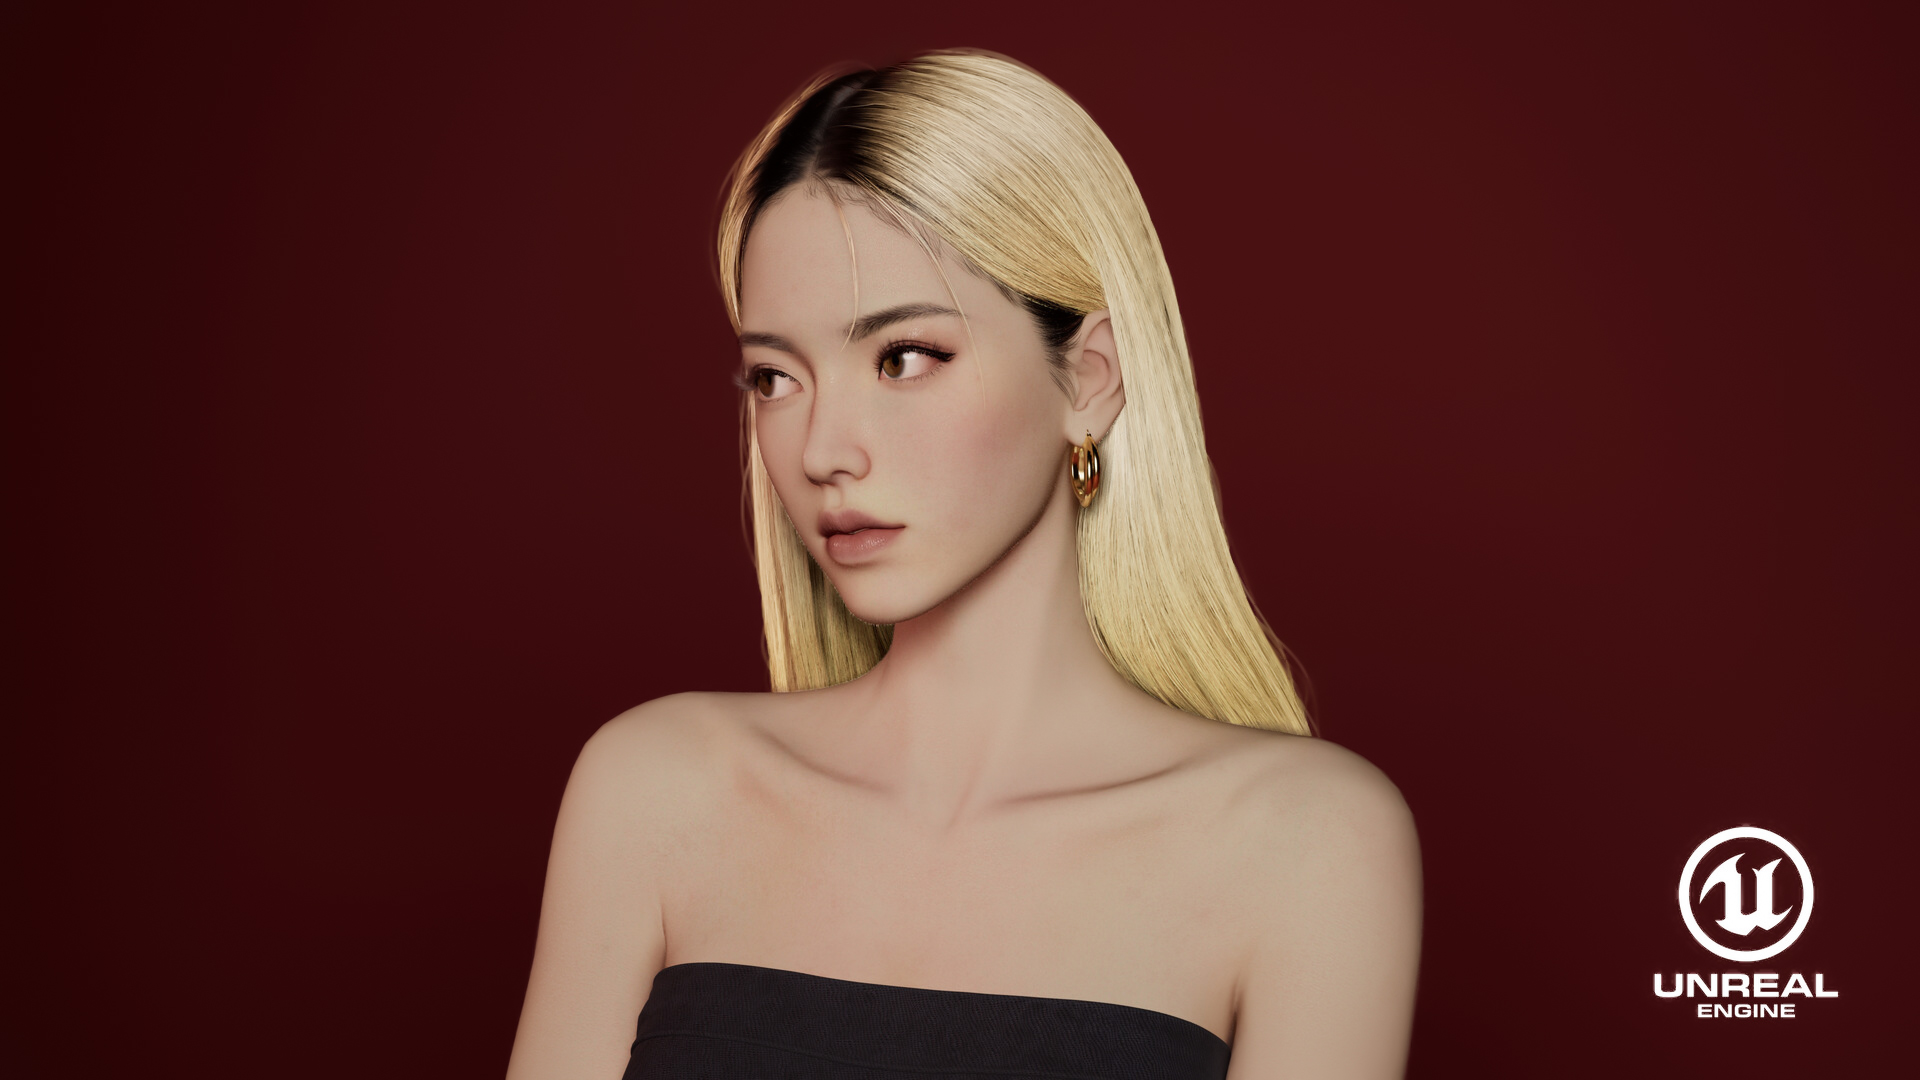 Ling Jie Zeng CGi Women Blonde Long Hair Portrait Bare Shoulders Black Clothing Red Background Front 1920x1080